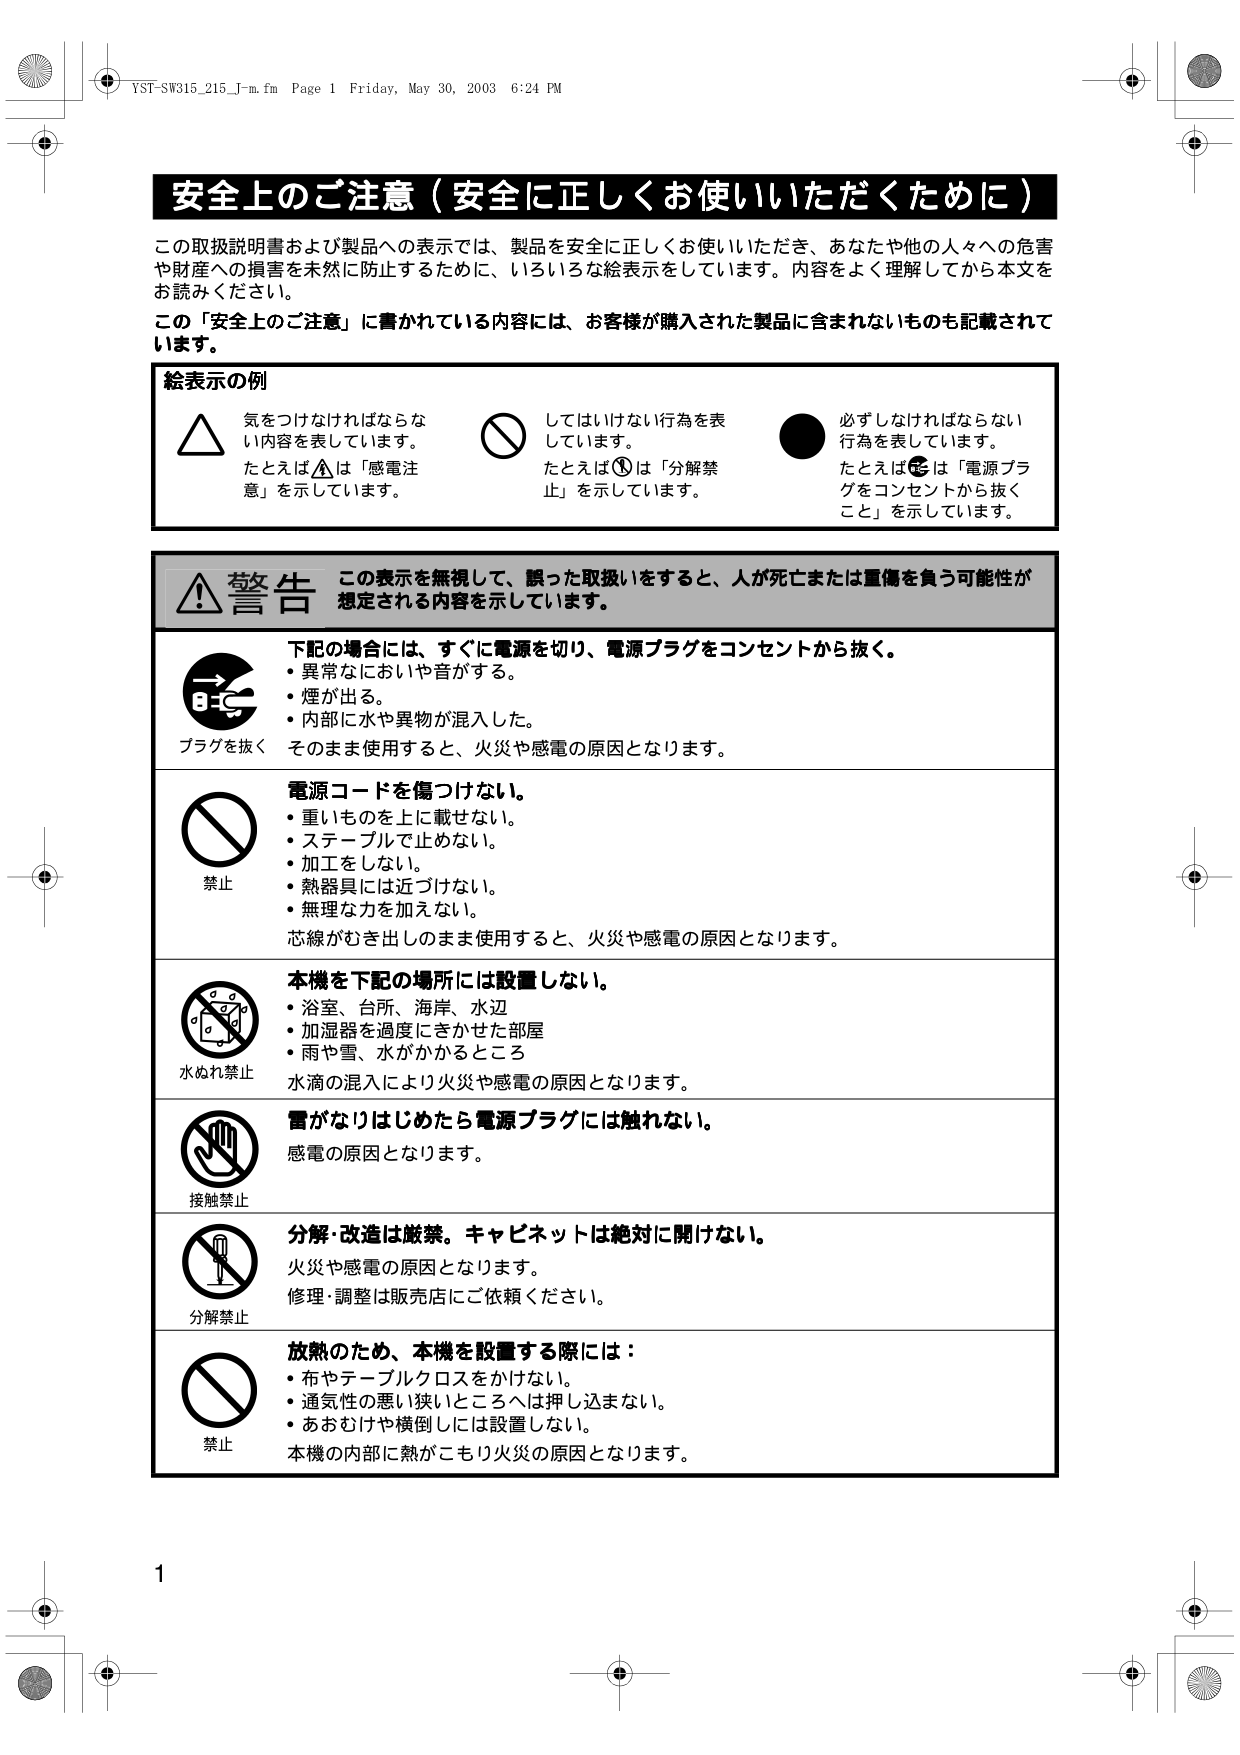 PDF manual for Yamaha Subwoofer YST-SW315